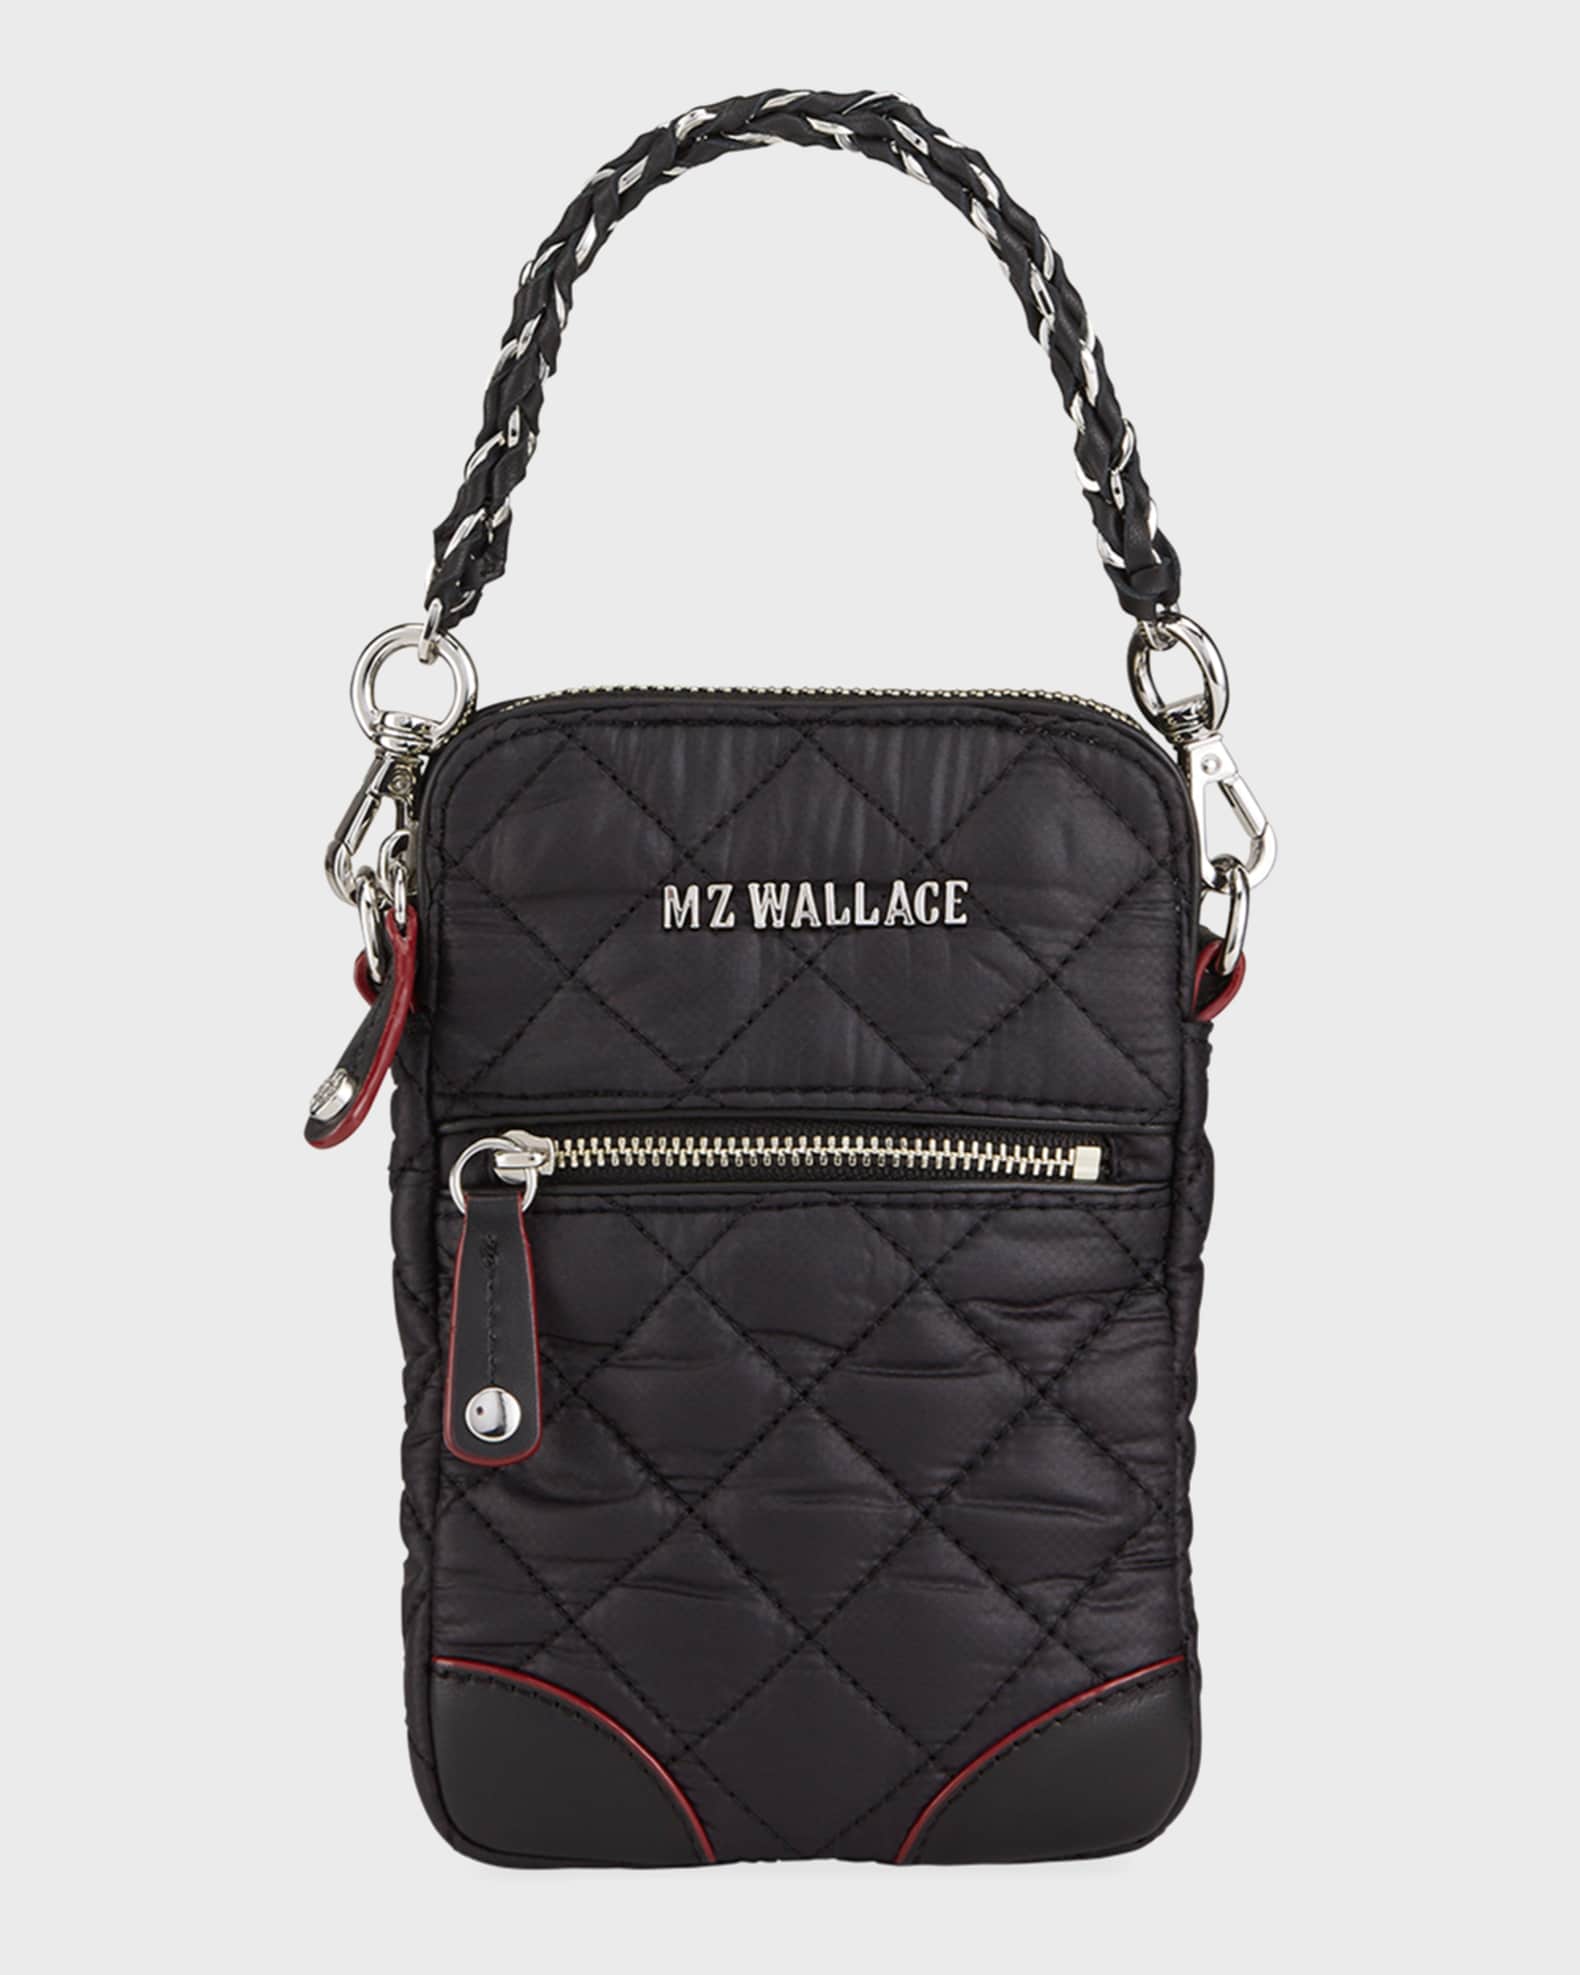 MZ Wallace Micro Crosby Bag in Black